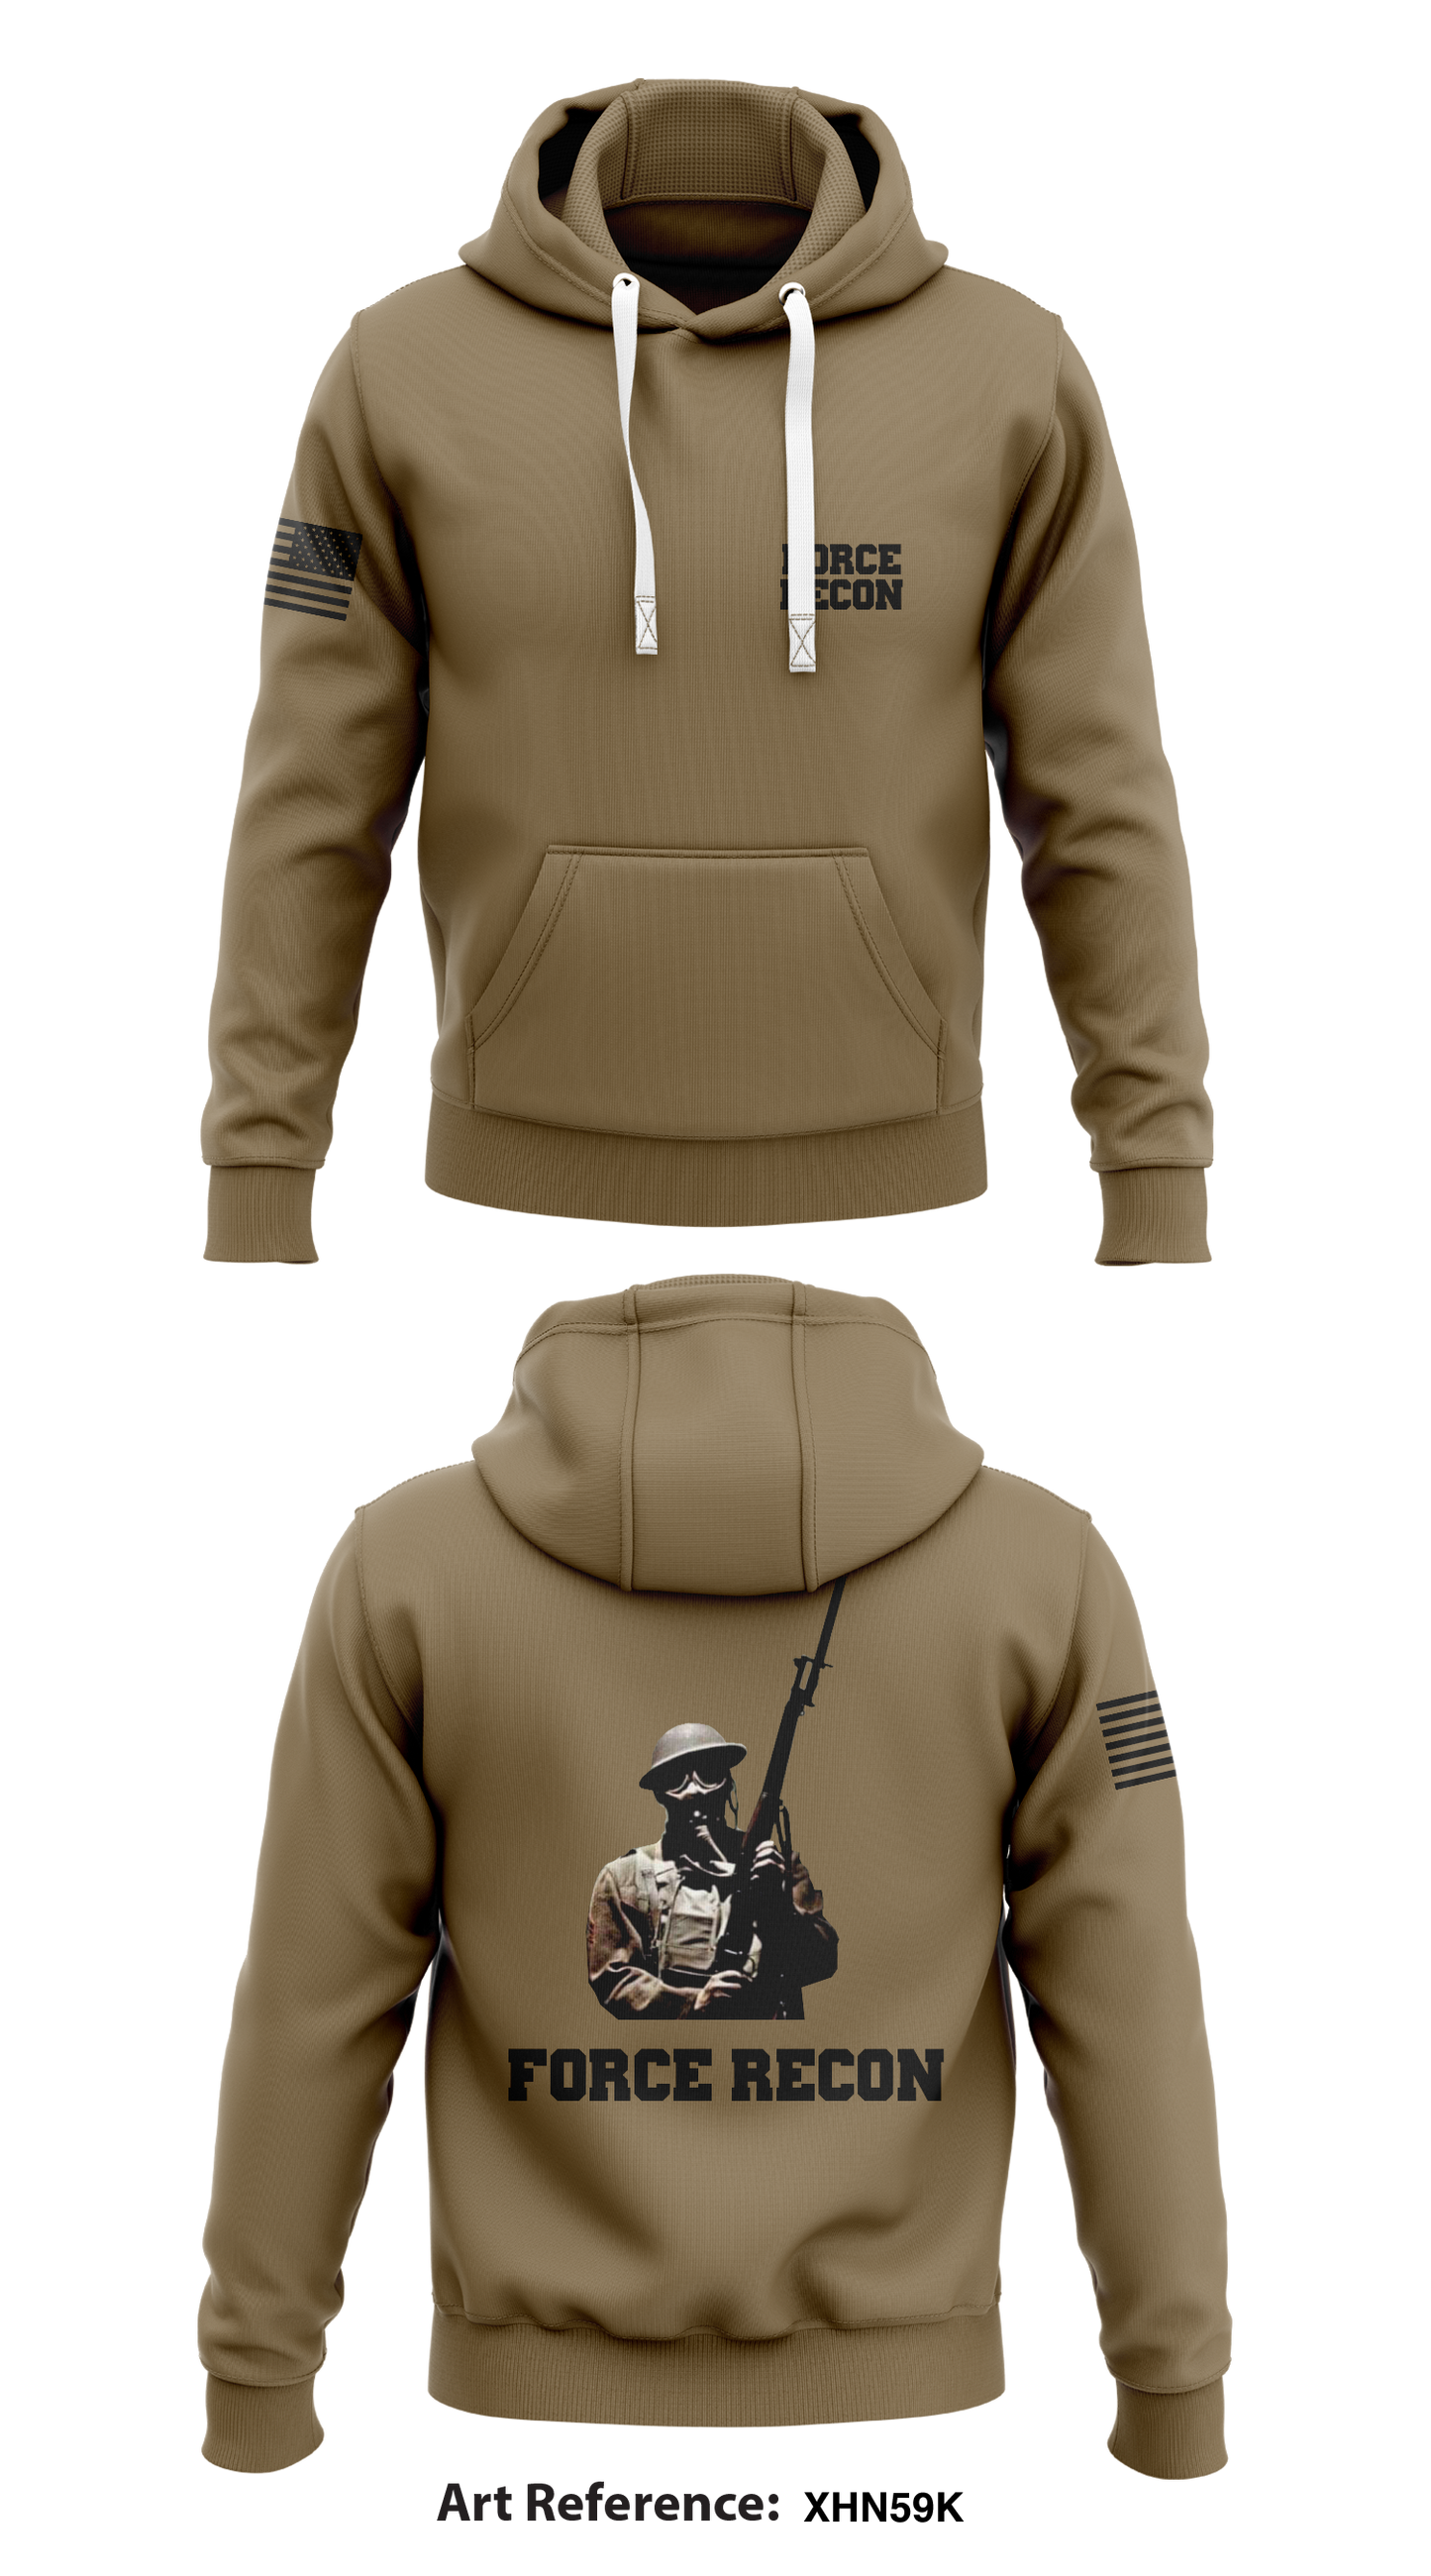 Force Recon Store 1  Core Men's Hooded Performance Sweatshirt - xhN59k